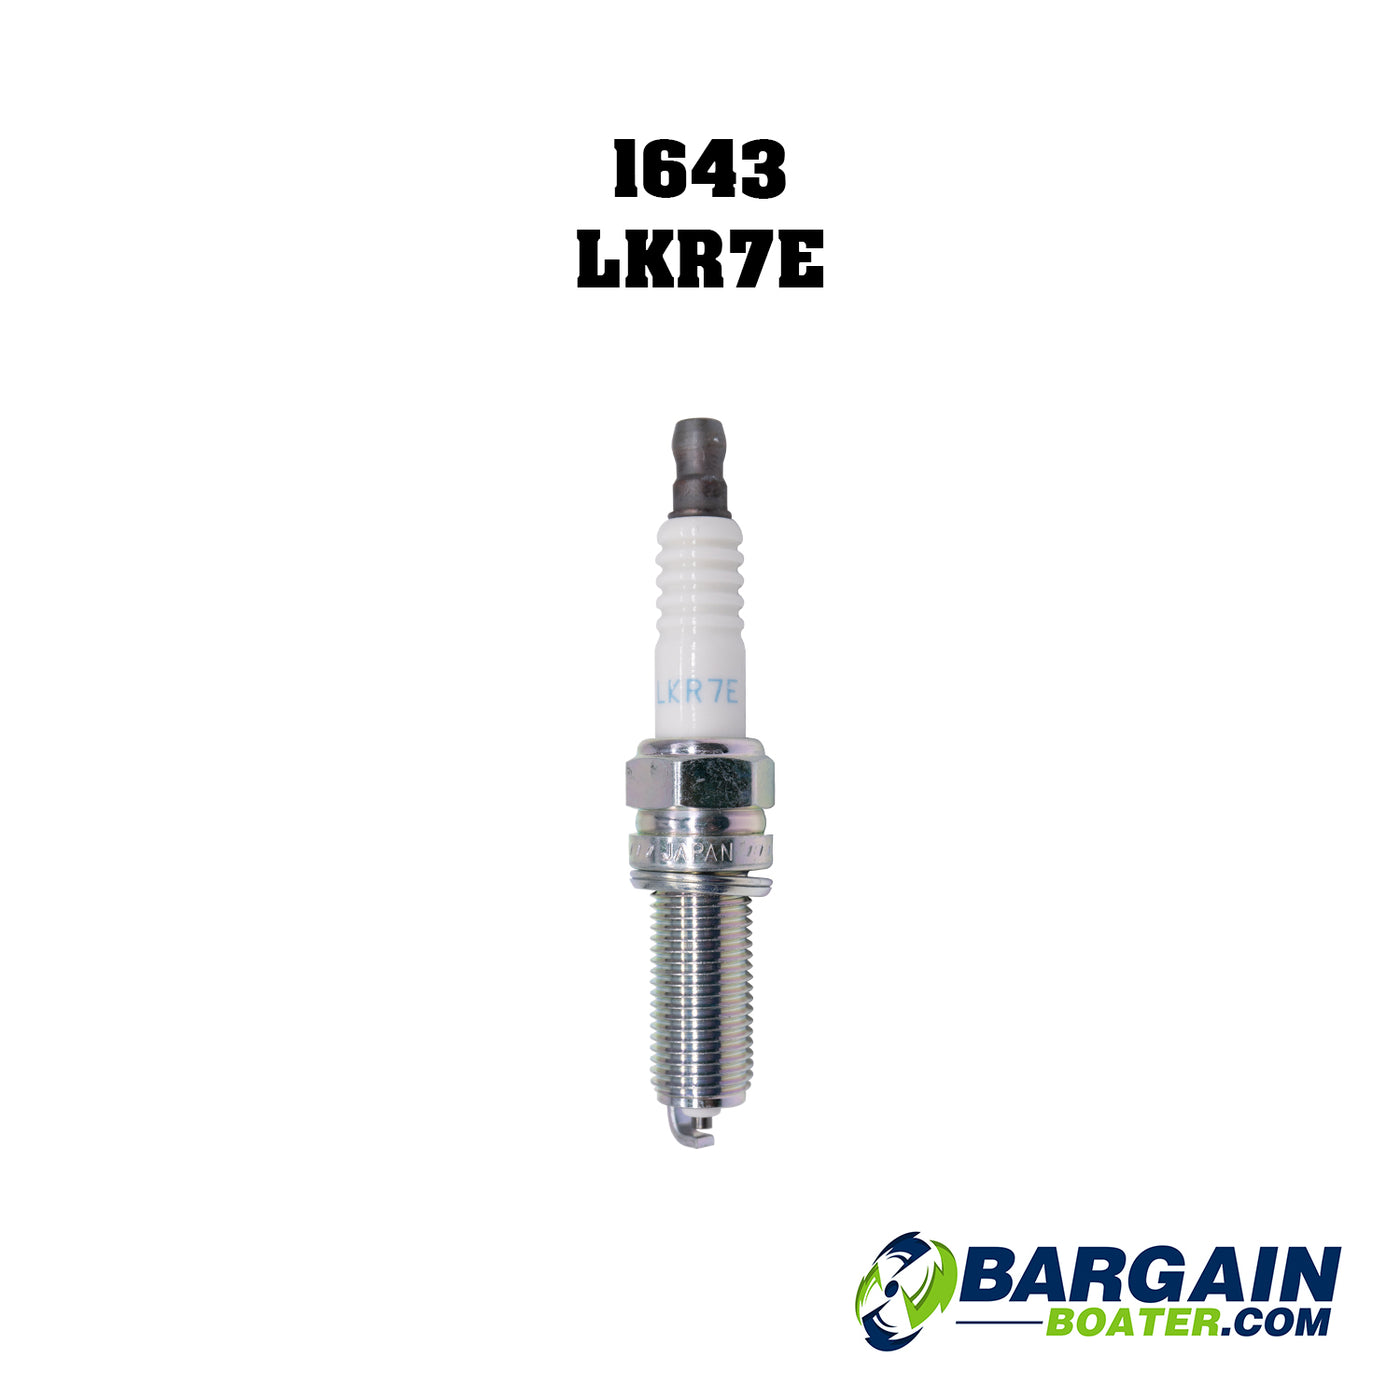 This is an NGK 1643 LKR7E Spark Plug, Yamaha part number LKR-7E000-00-00